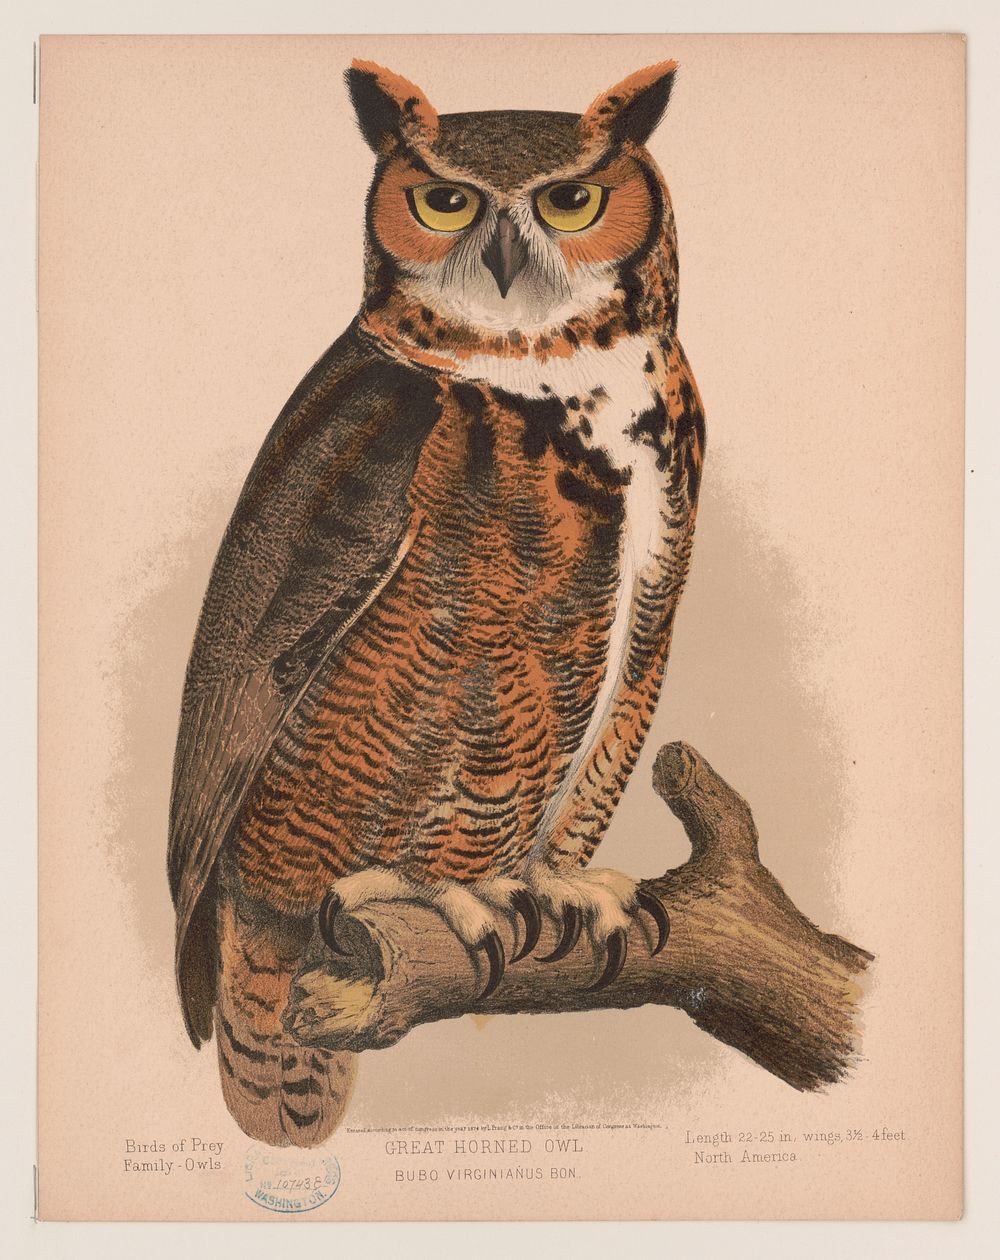 Great horned owl. Bubo virginianus bon, L. Prang & Co., publisher